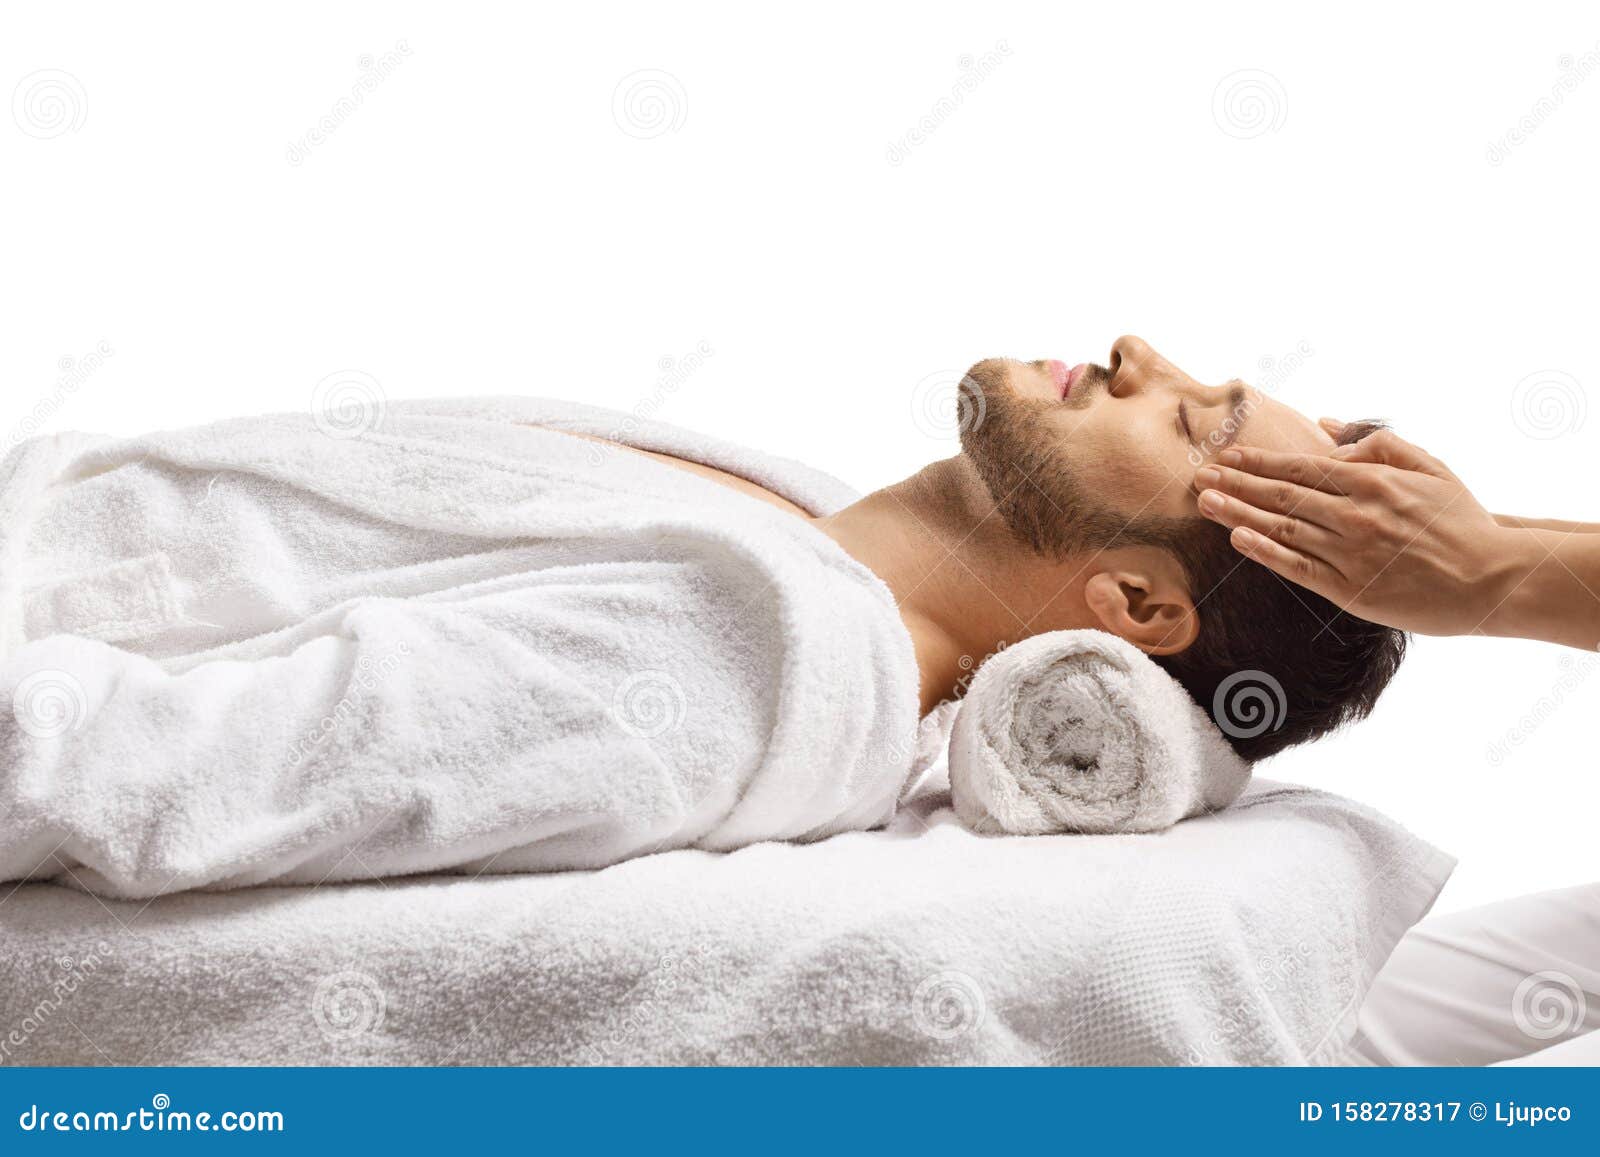 Man At A Spa Center Enjoying A Head Massage Stock Image Image Of